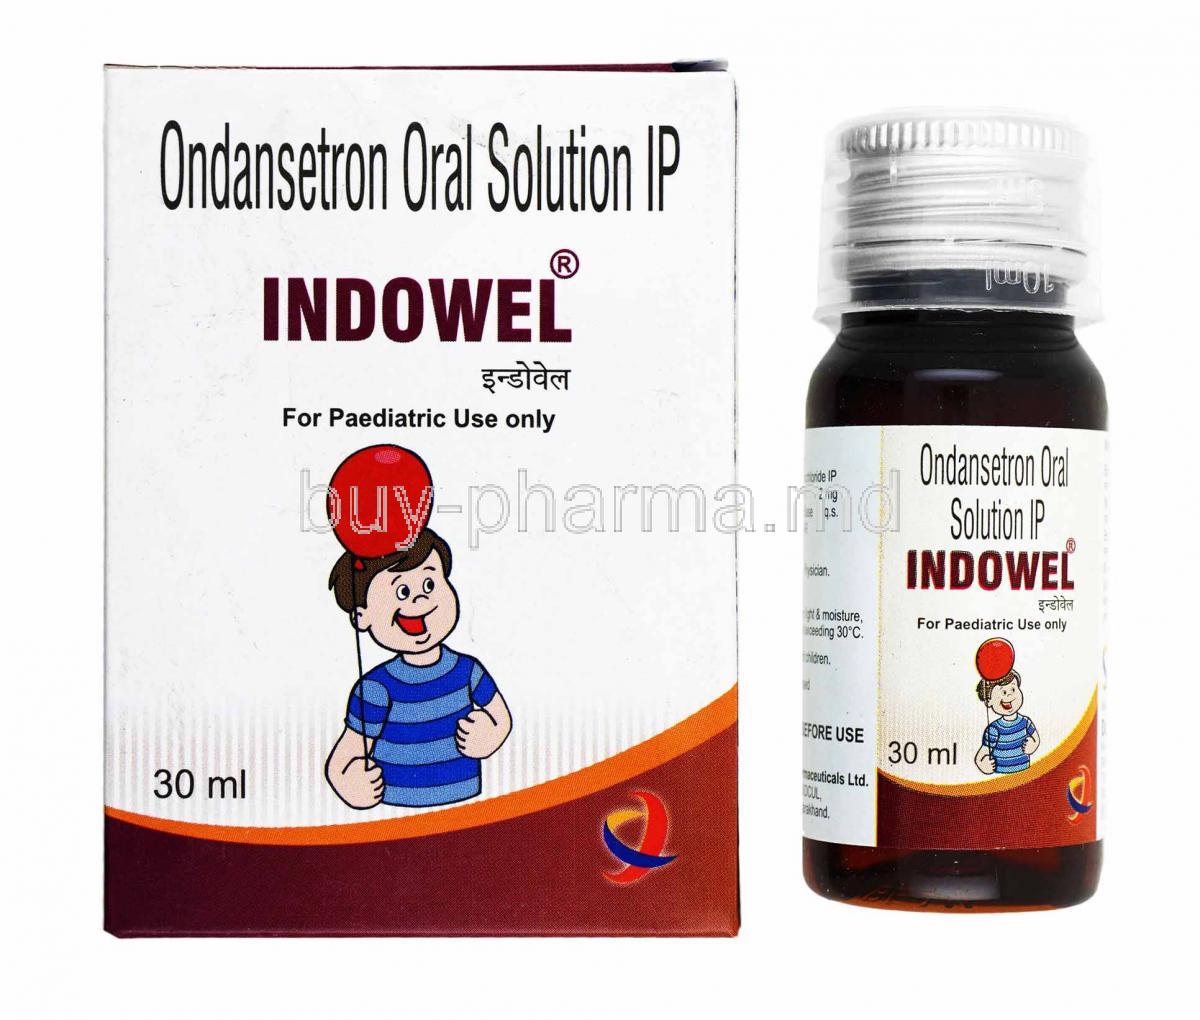 Indowel Oral Solution, Ondansetron box and bottle